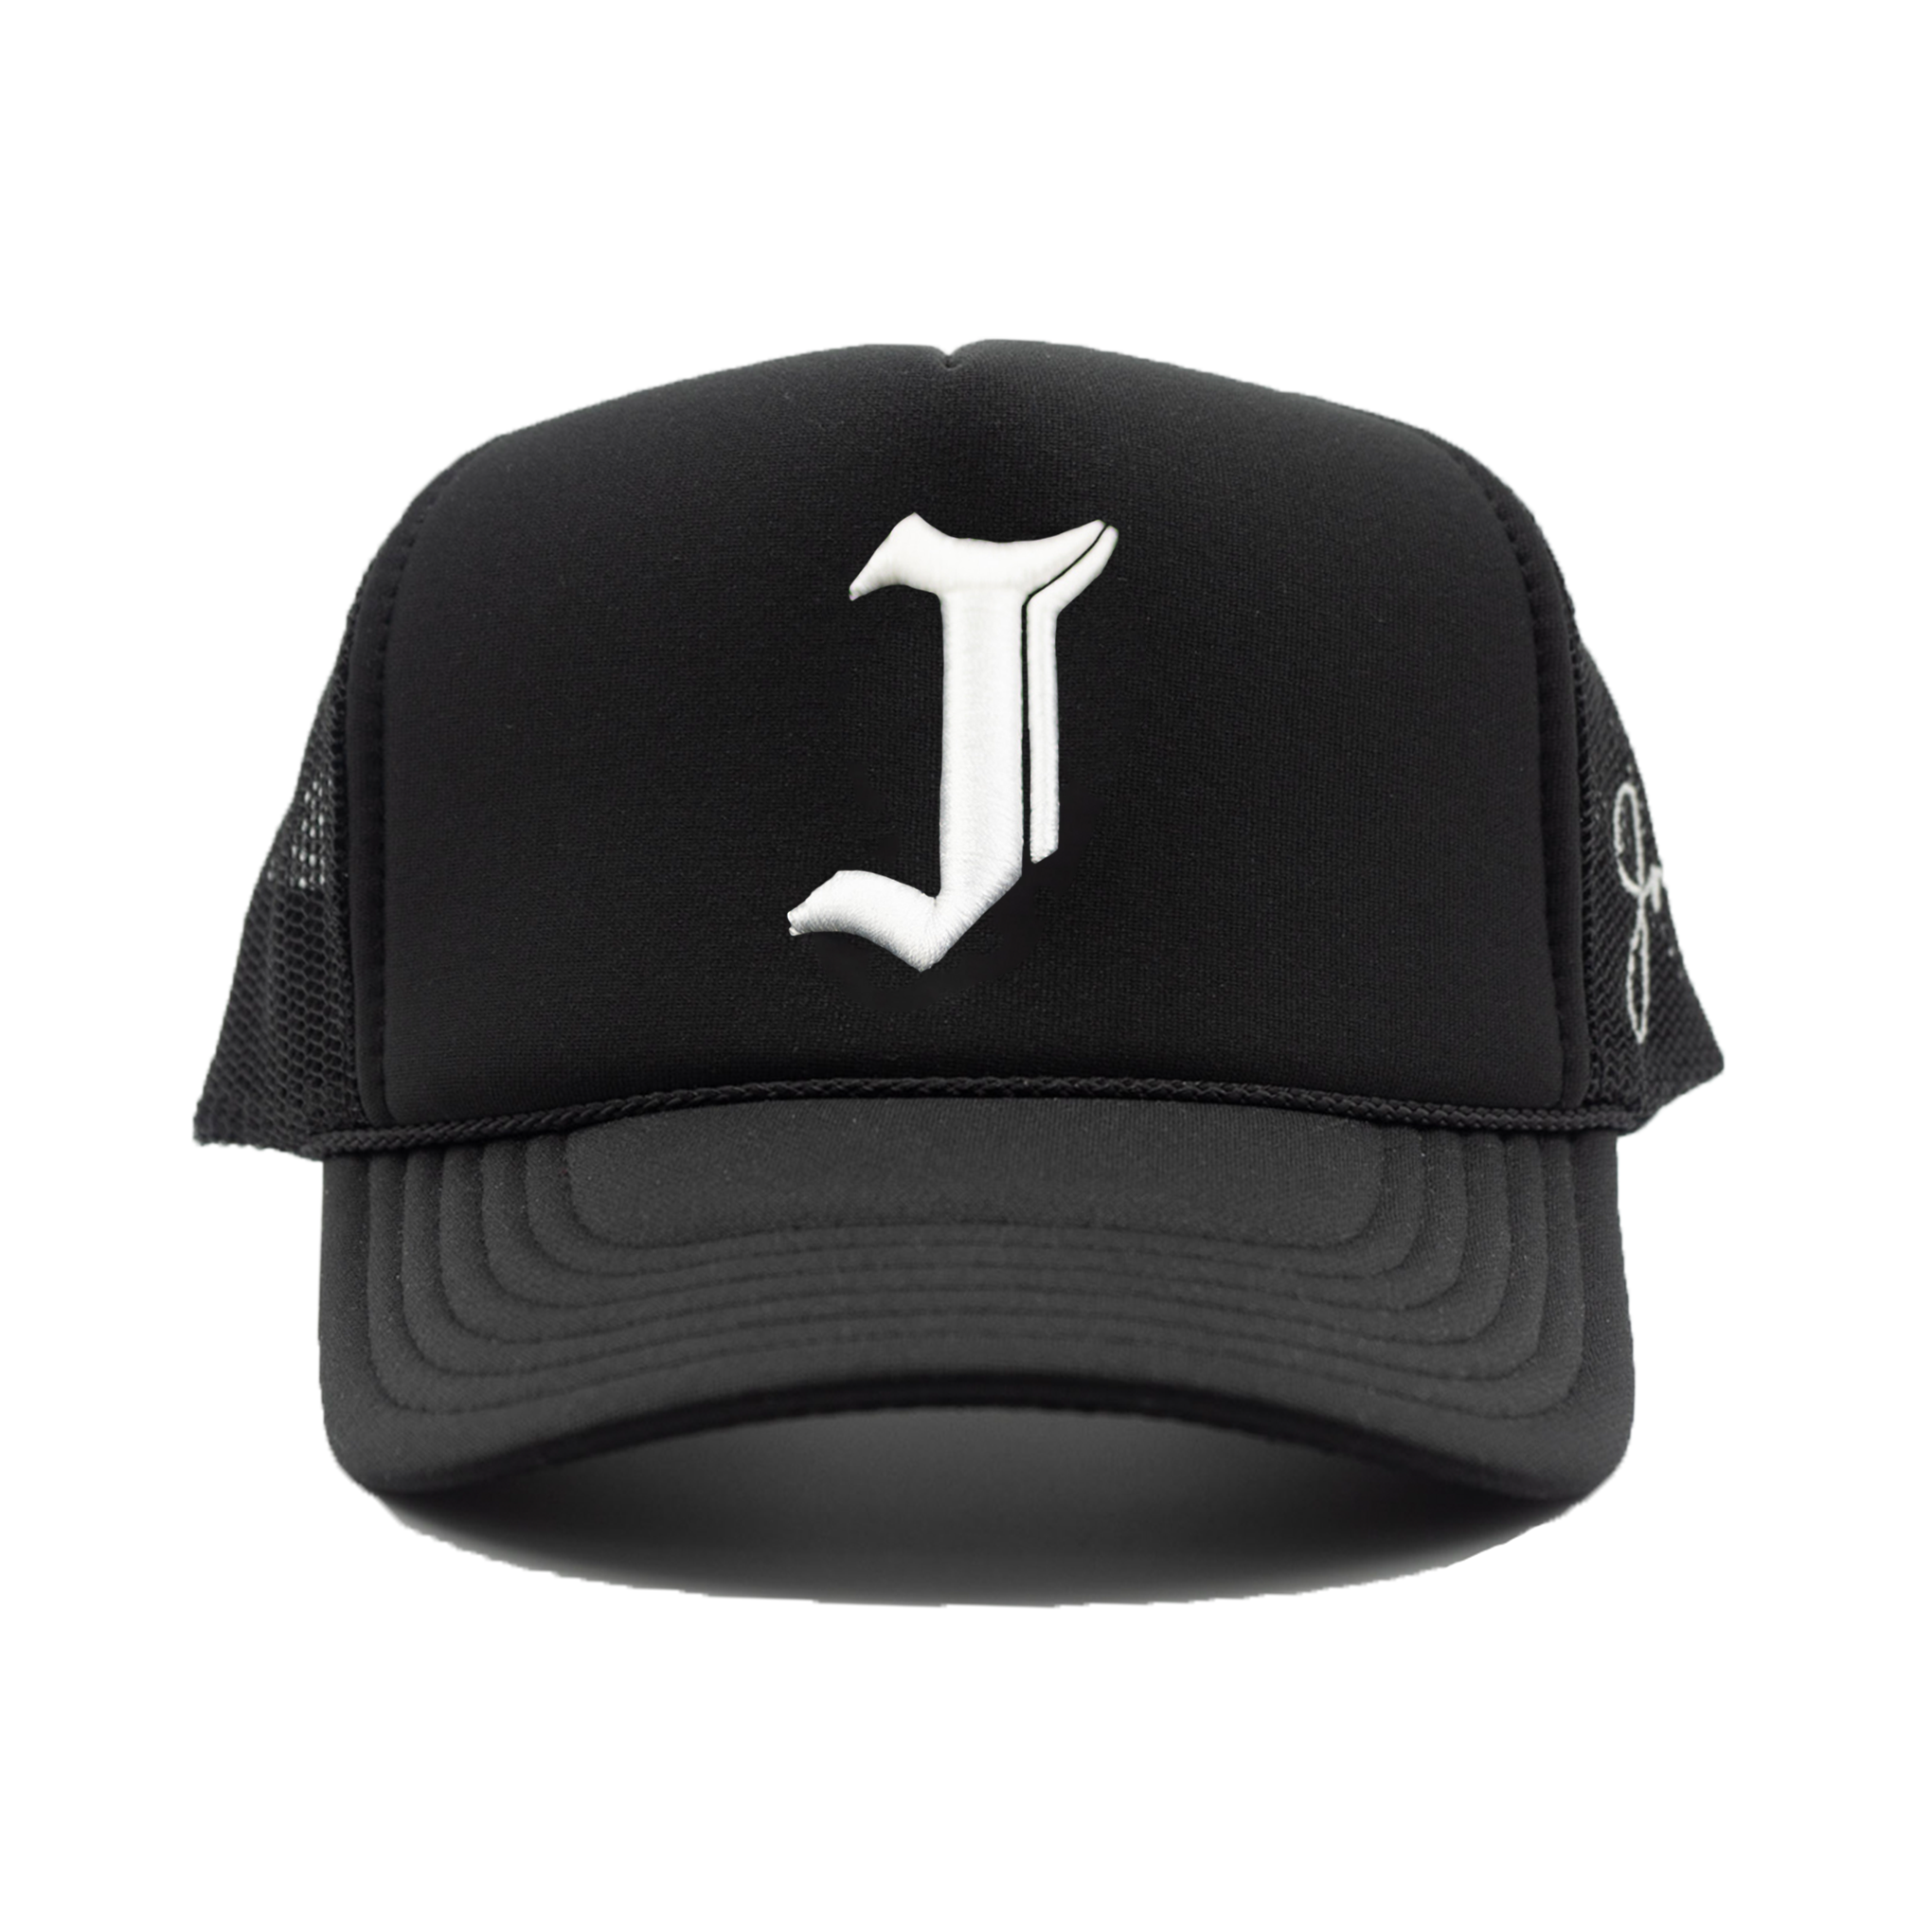 "J" Signature Trucker Hat (BLACK)